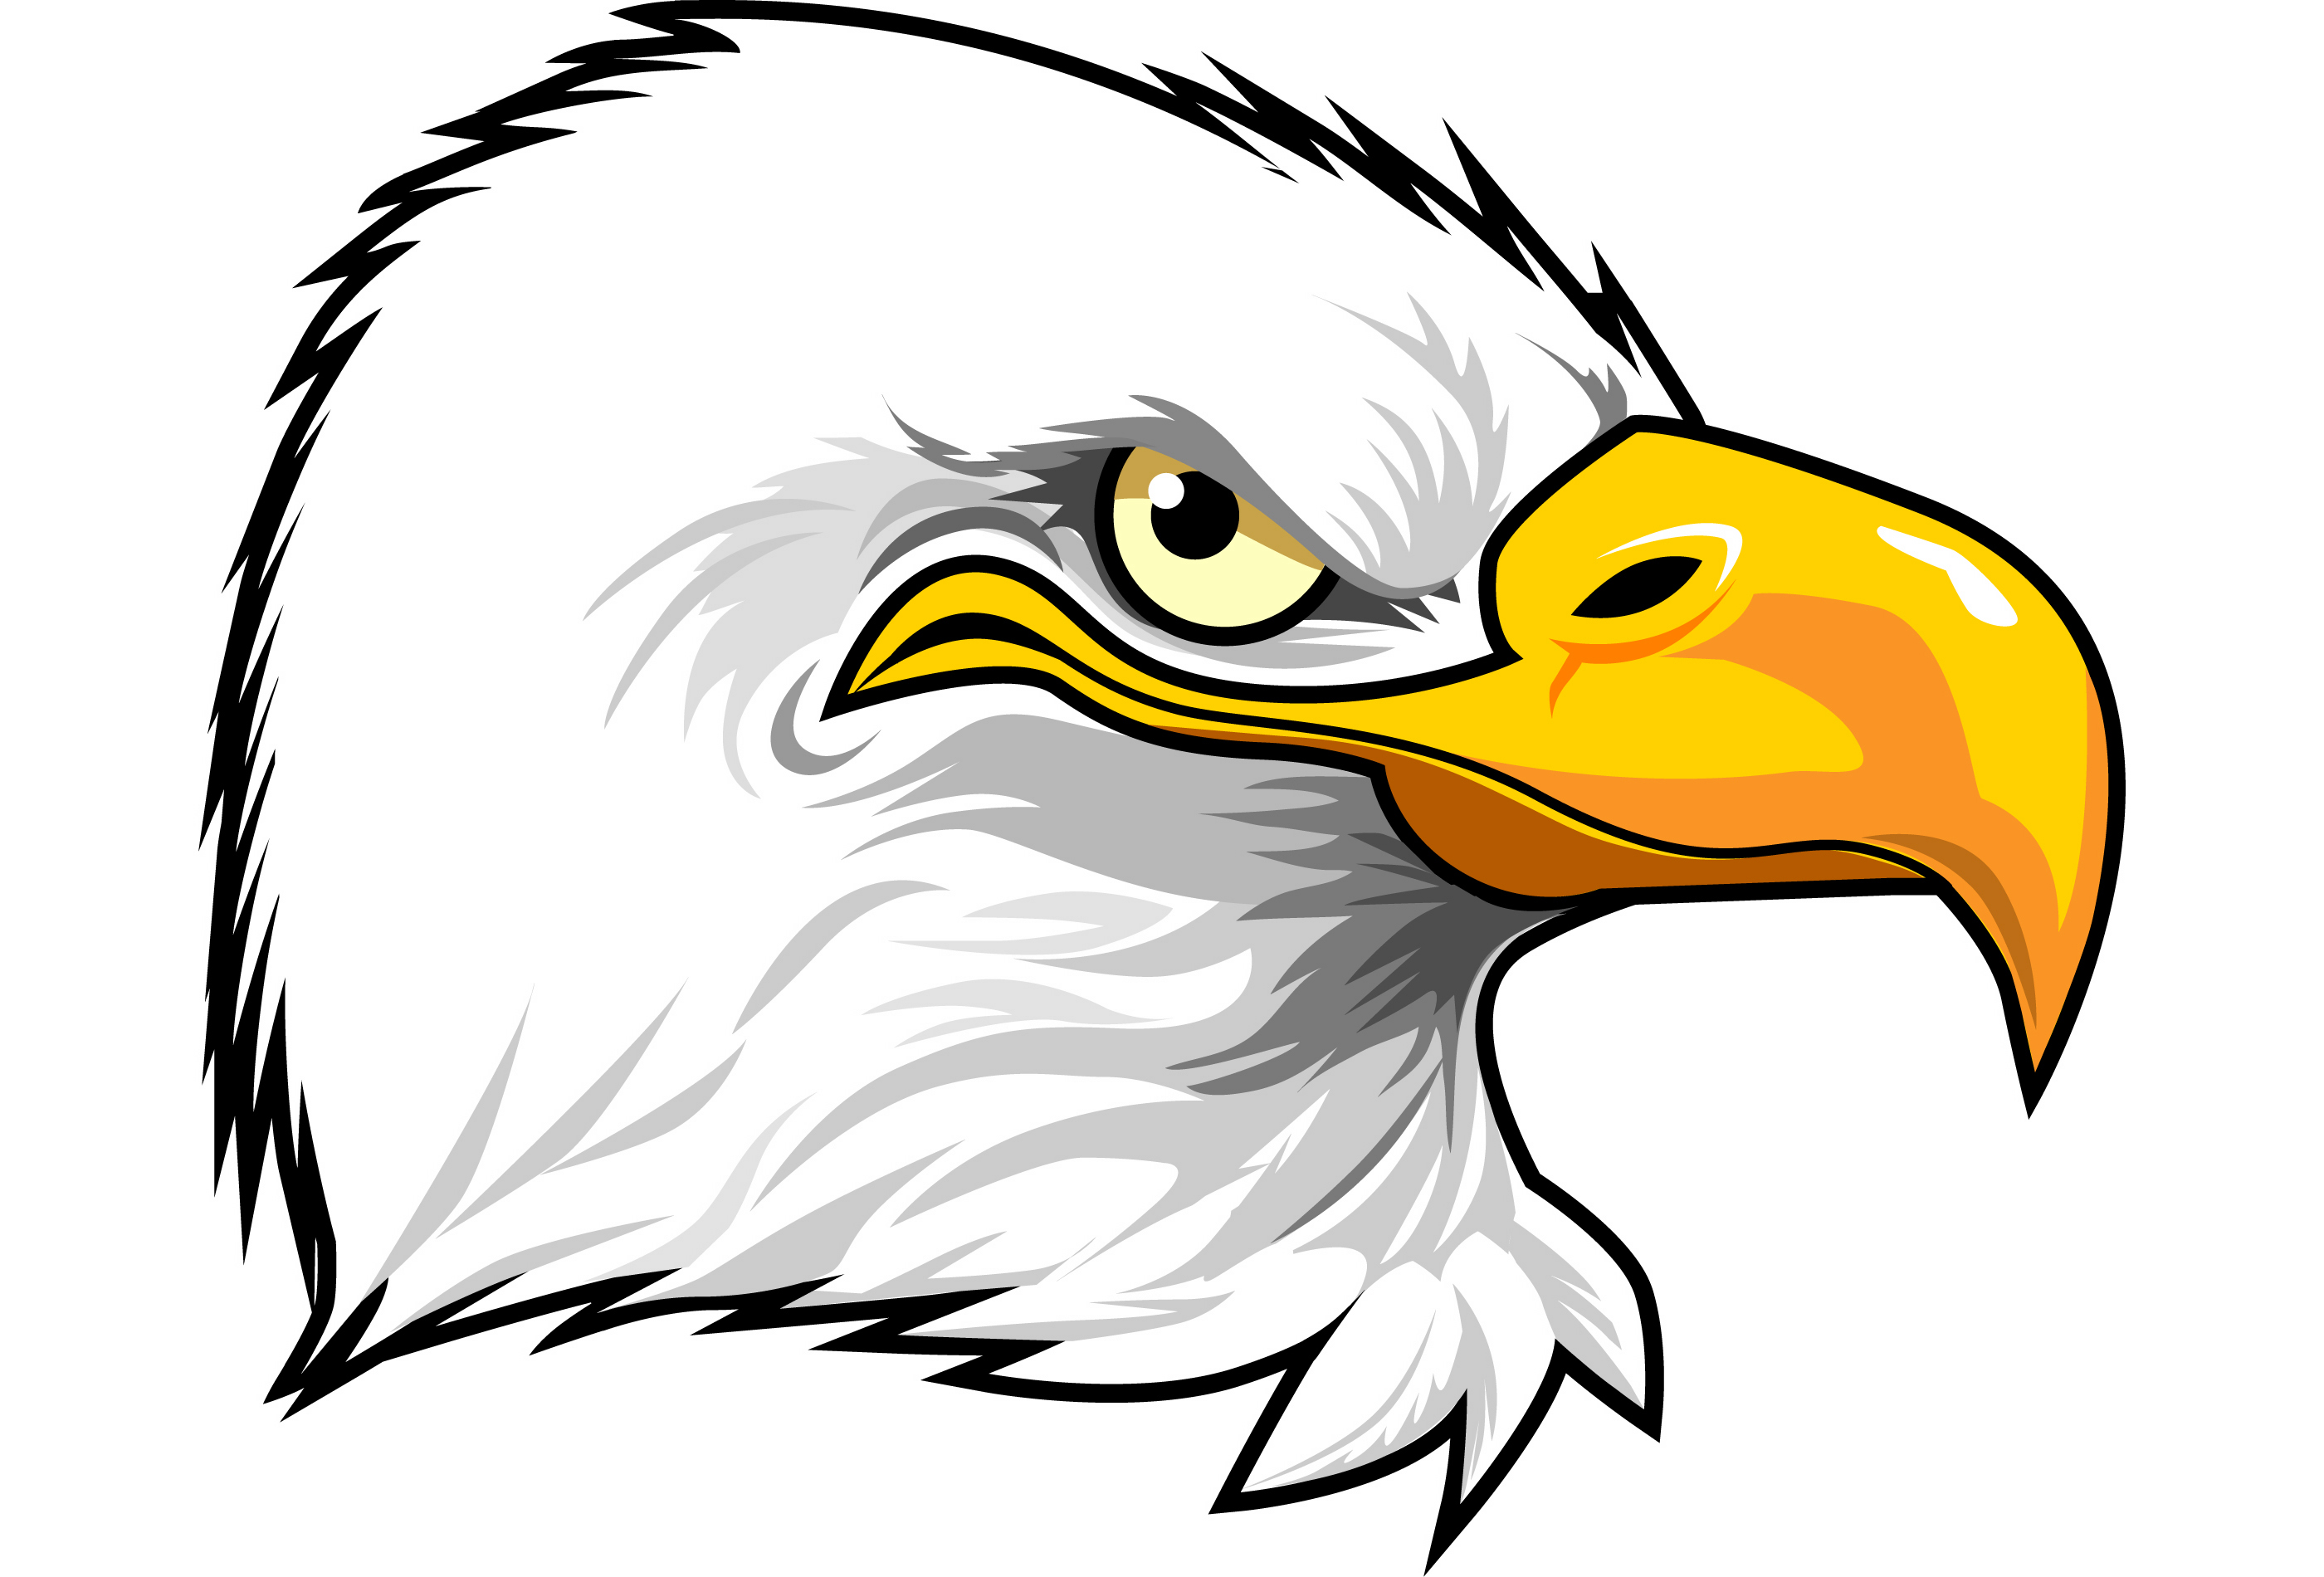 Eagle Cartoon Images Cliparts.co